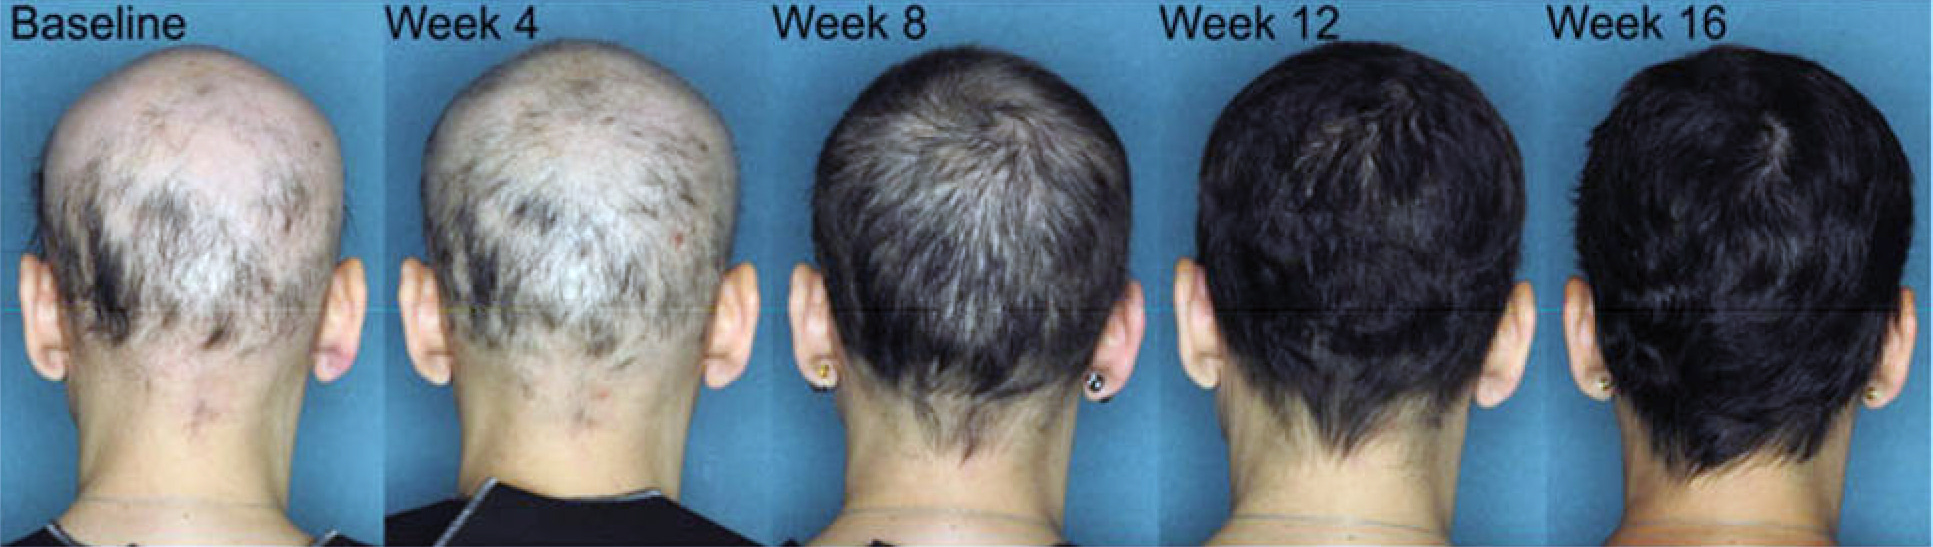 tofacitinib alopecia areata results 25 - Alopecia Areata Treatment: What Future Holds